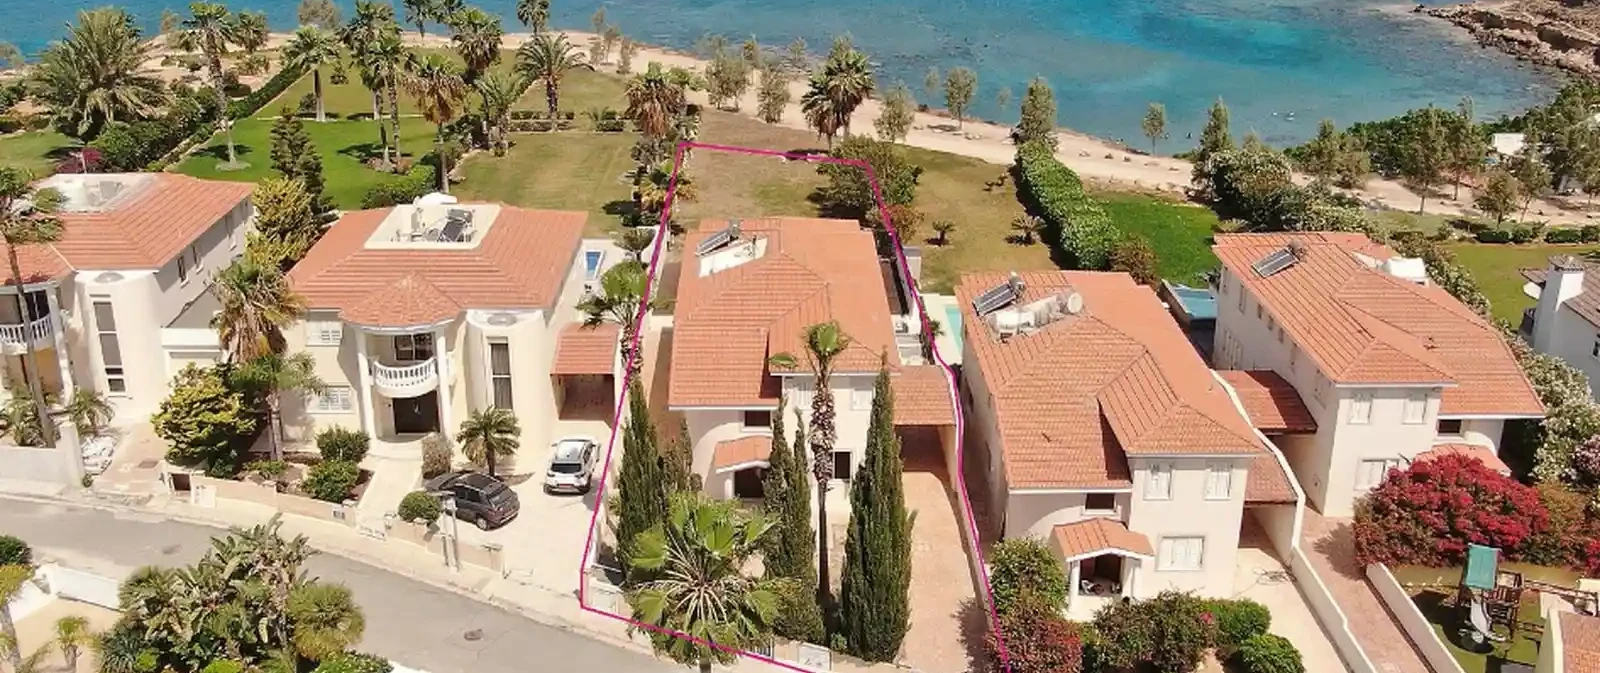 5-bedroom villa fоr sаle €1.825.000, image 1